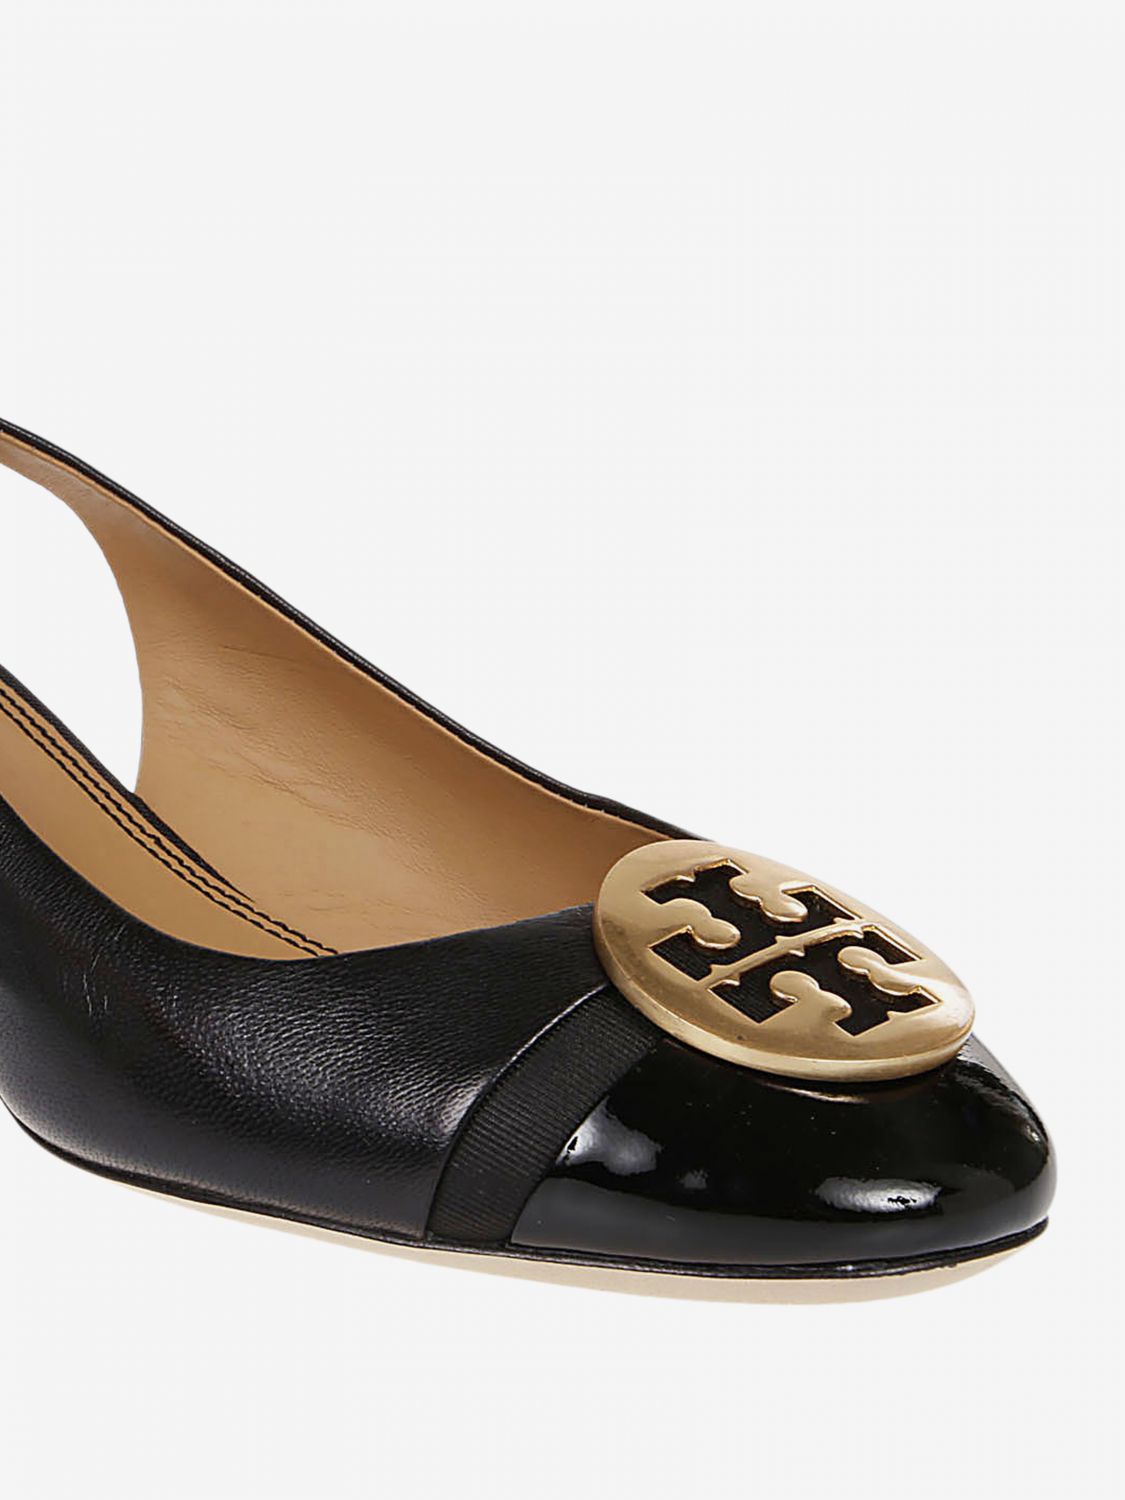 Tory Burch Outlet: Shoes women - Black | High Heel Shoes Tory Burch ...